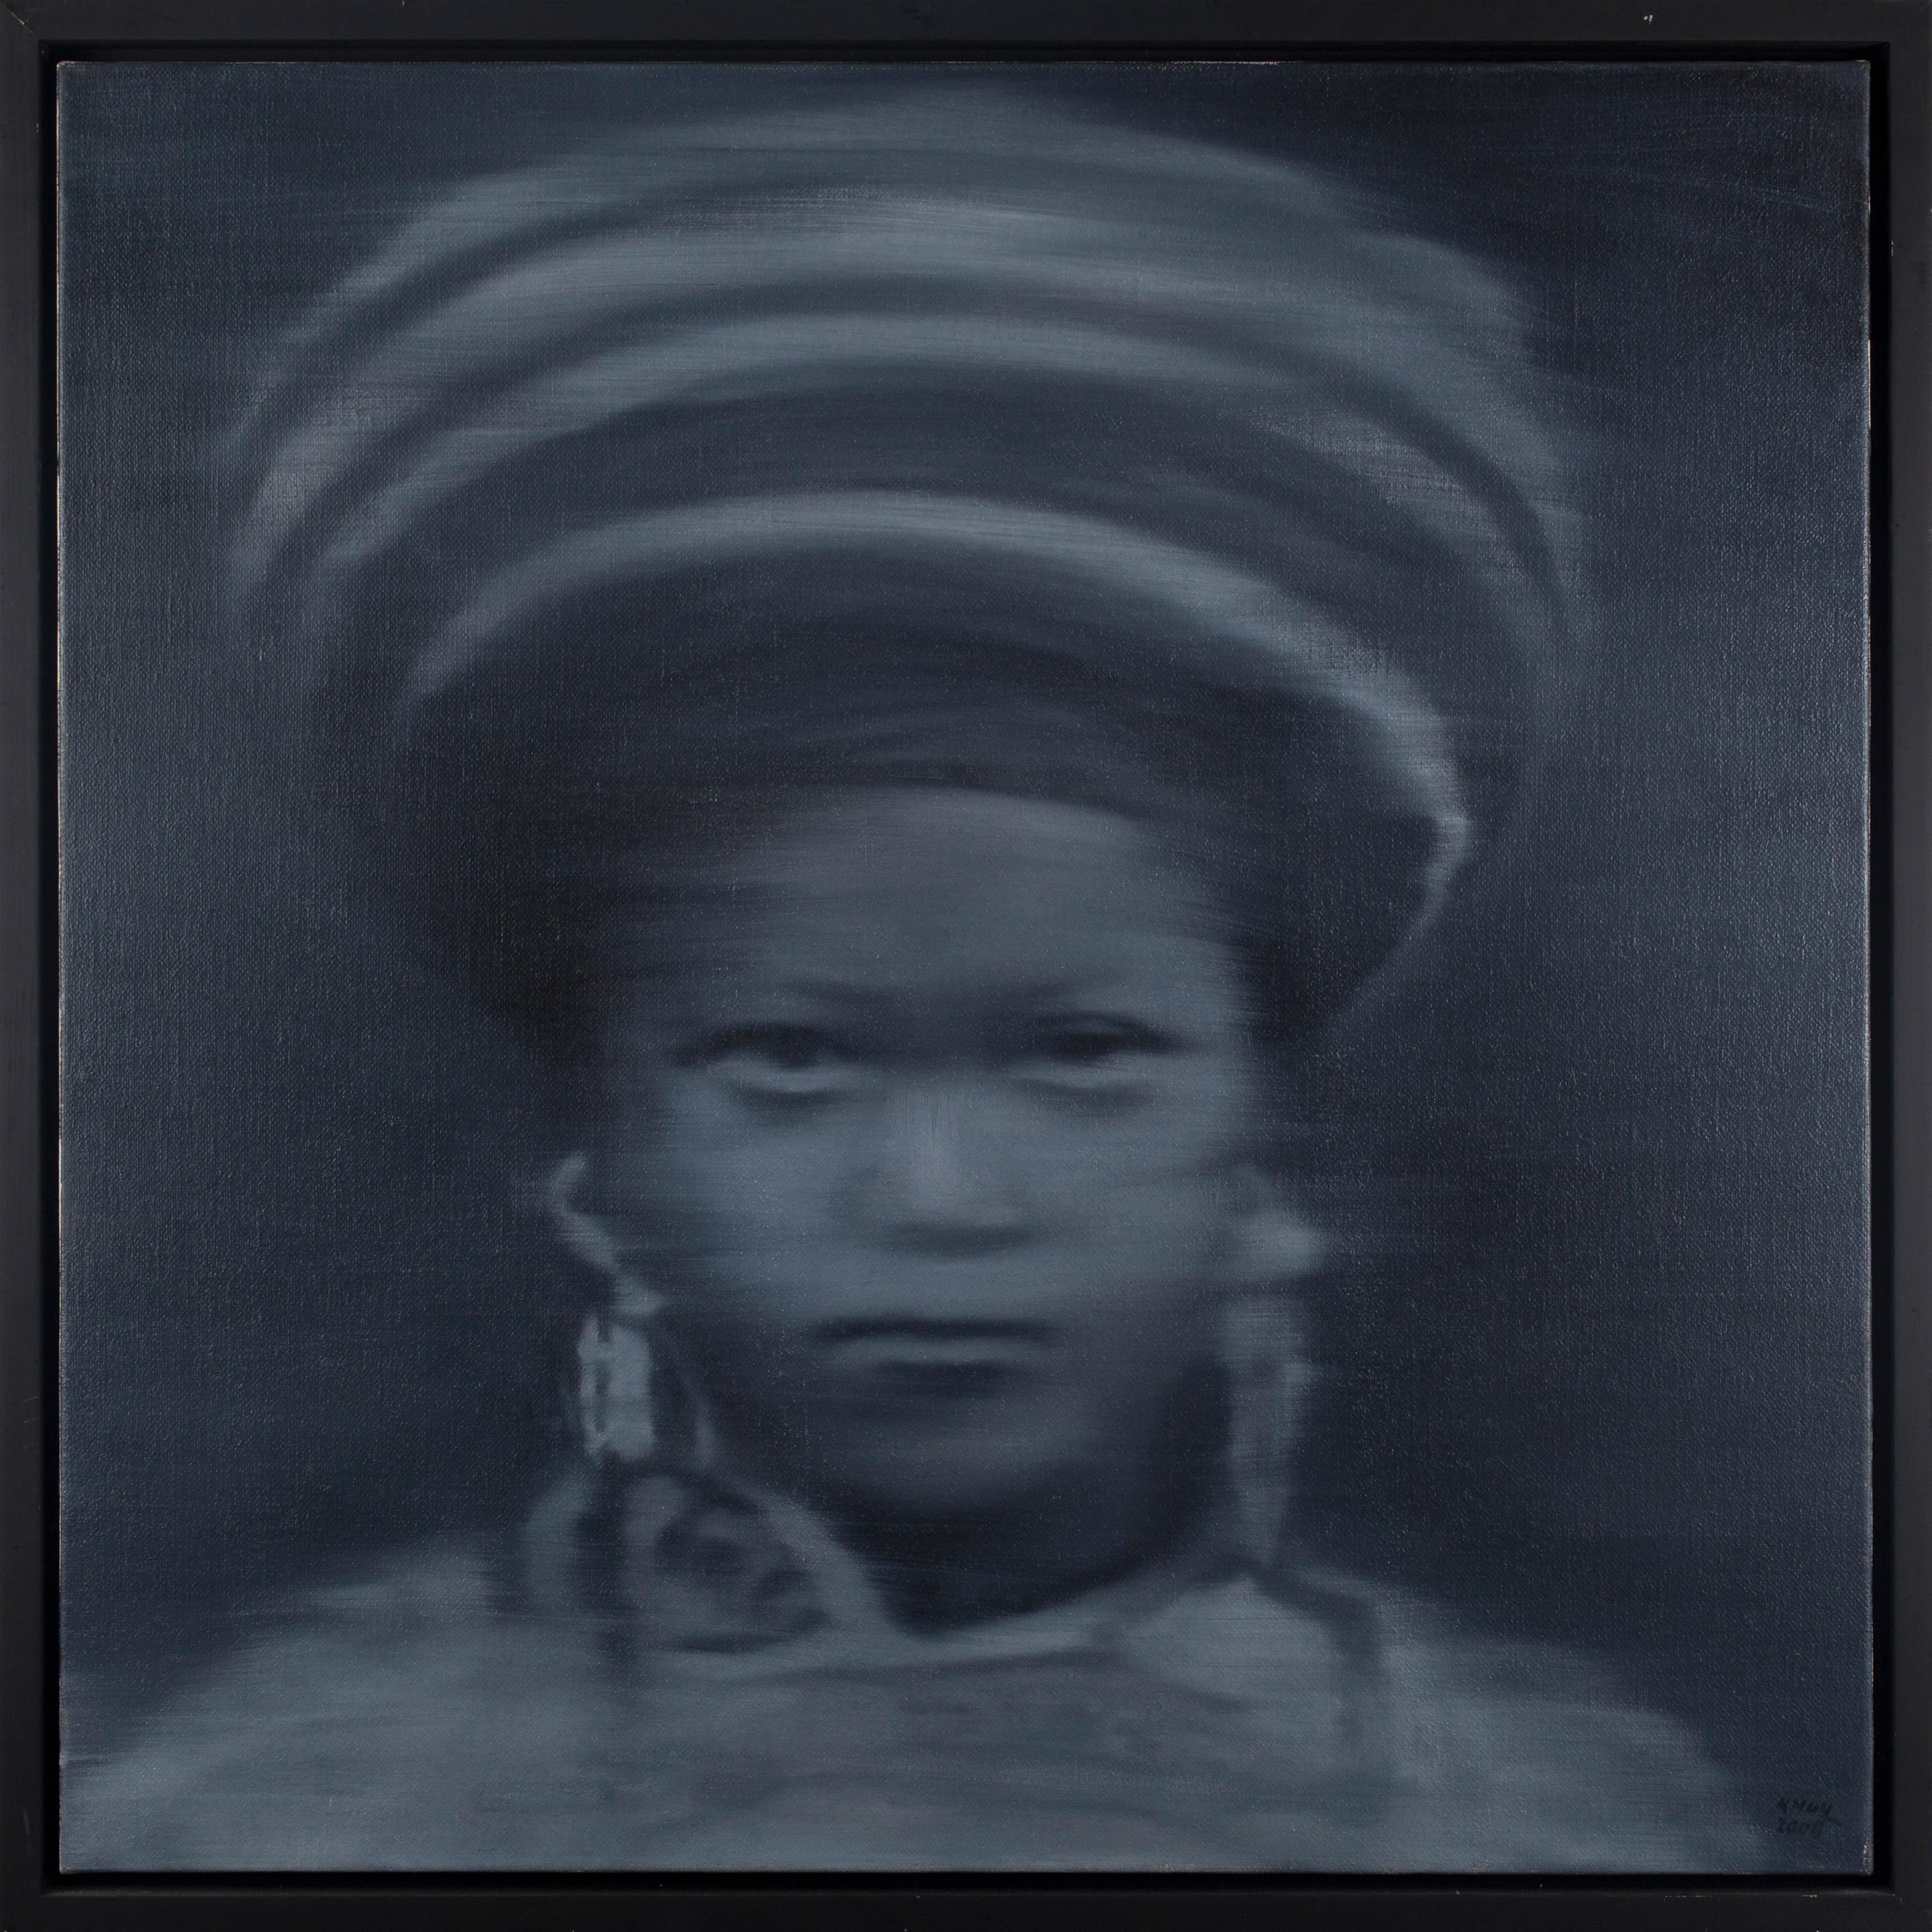 « Femme indochine tribale II », peinture de portrait photoréaliste